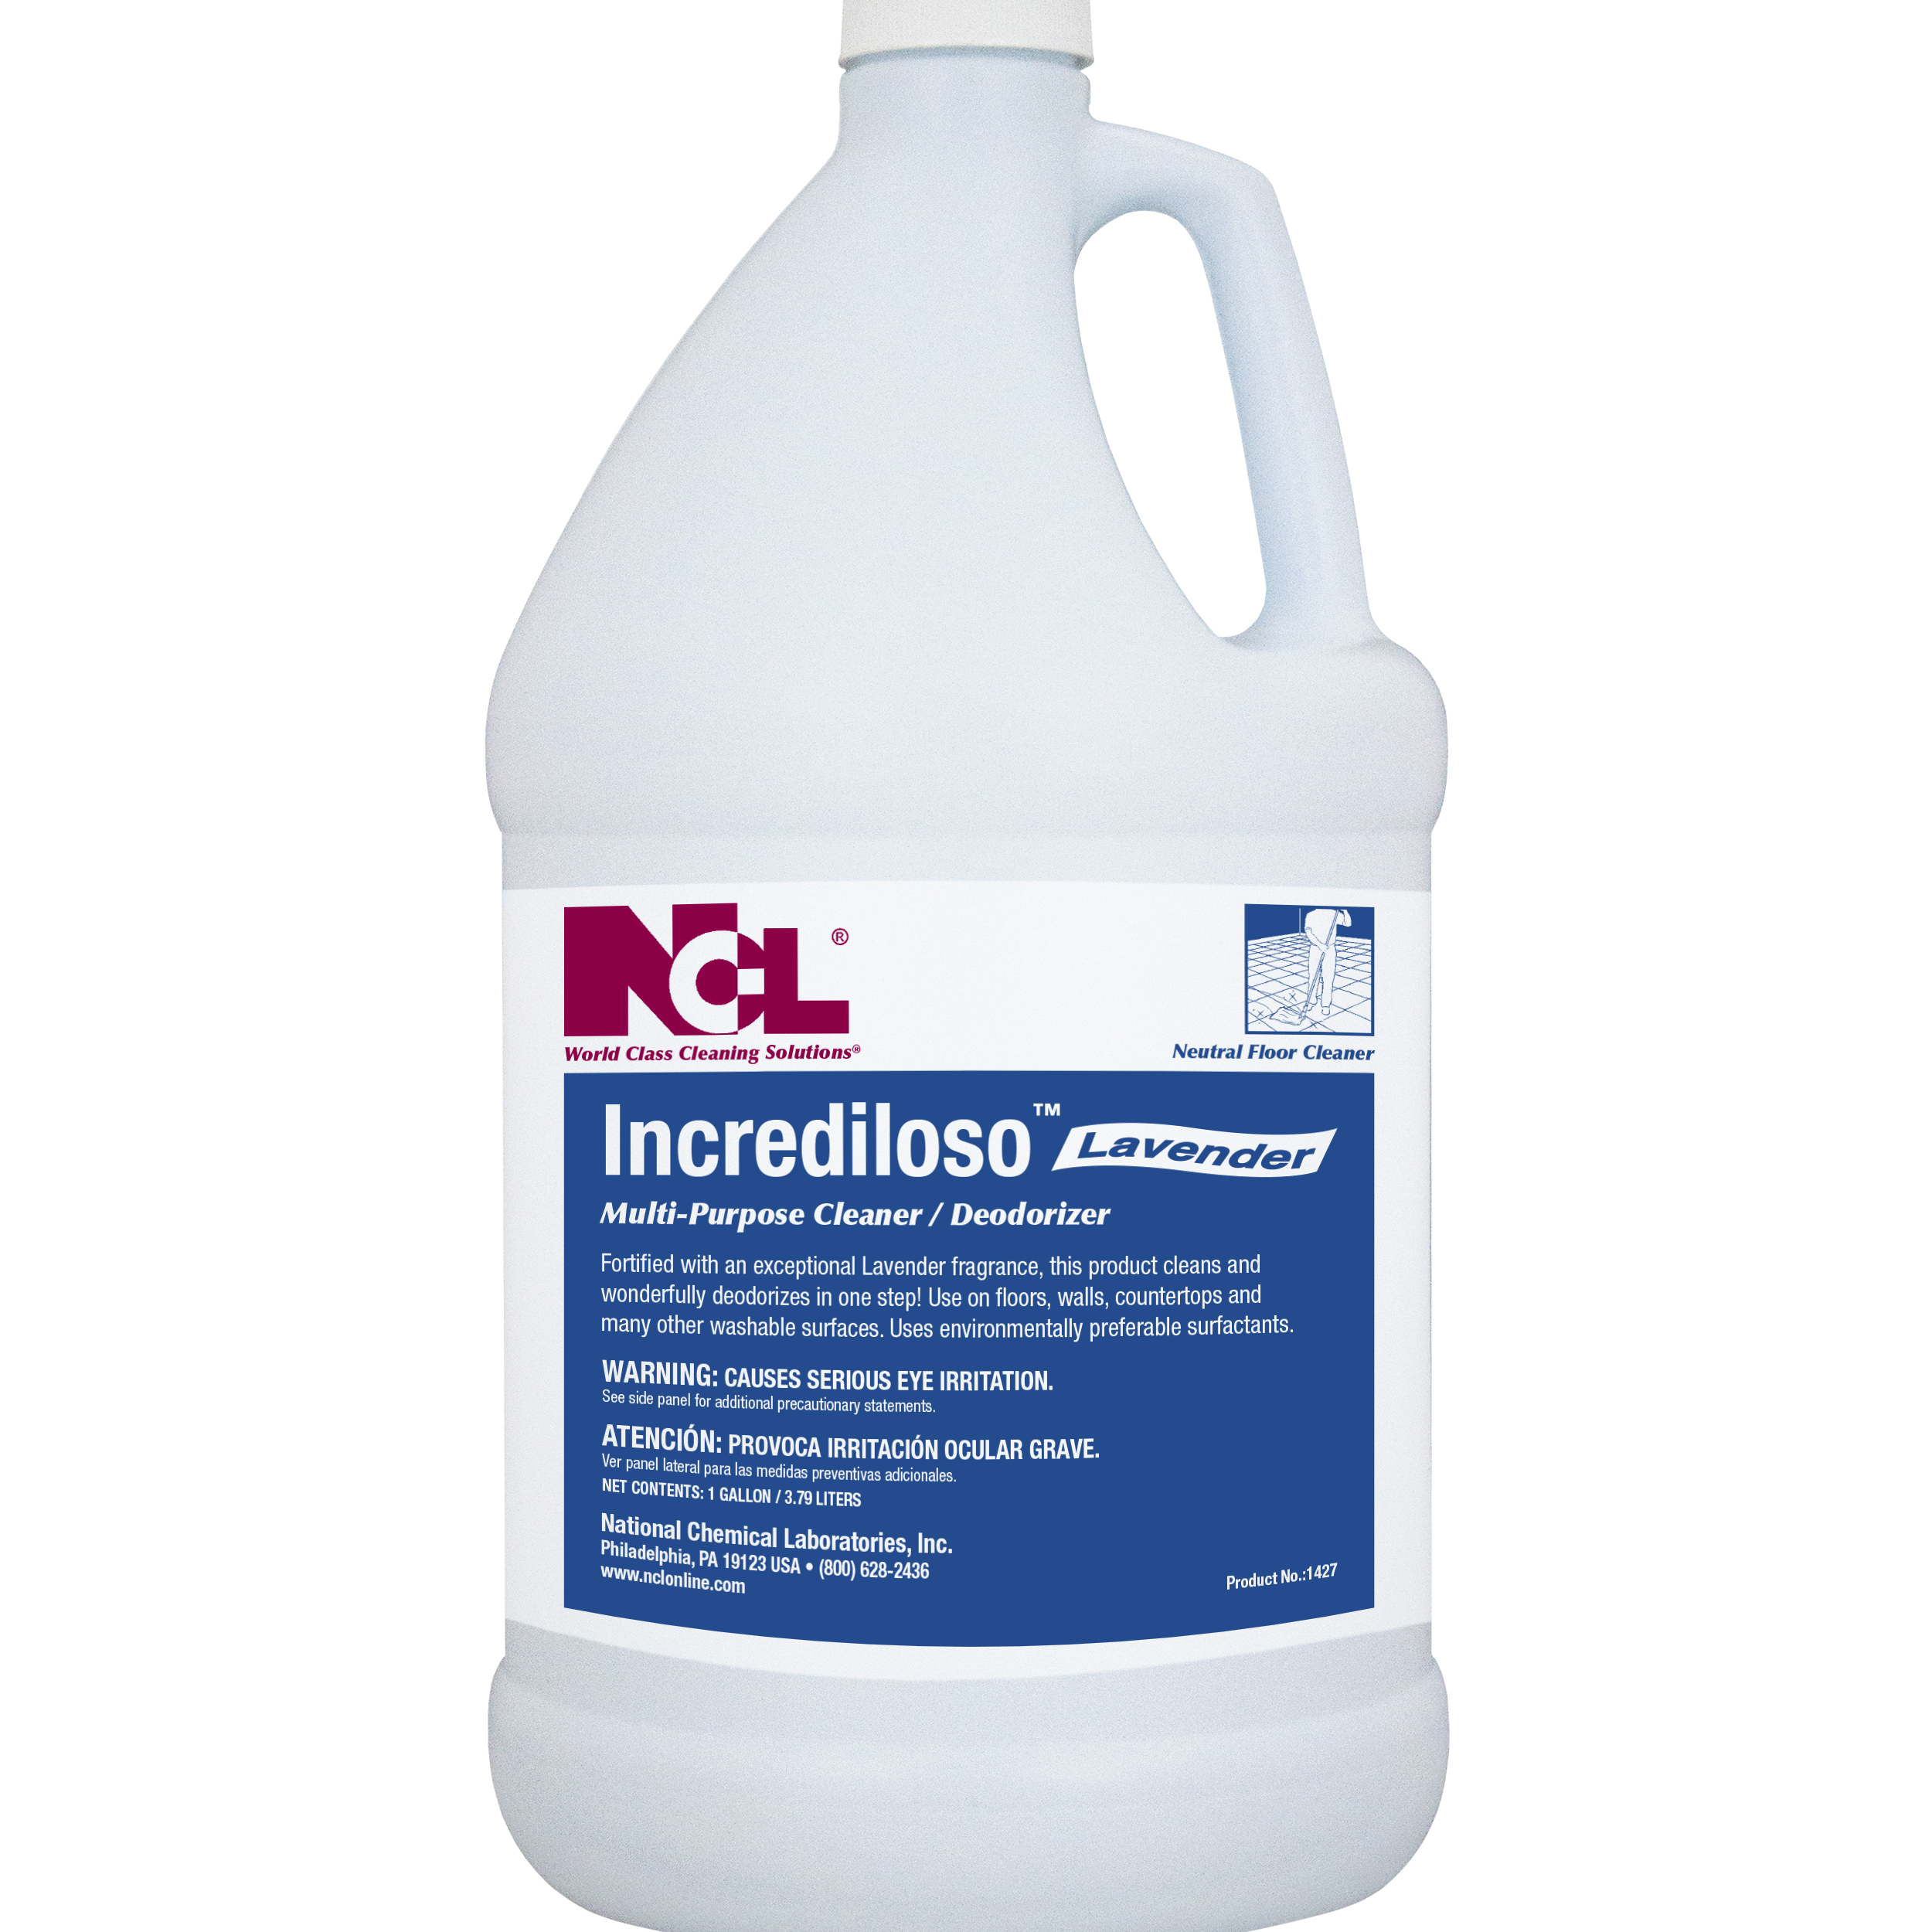  INCREDILOSO-LAVENDER Multi-Purpose Cleaner / Deodorizer 4/1 Gal. Case (NCL1427-29) 